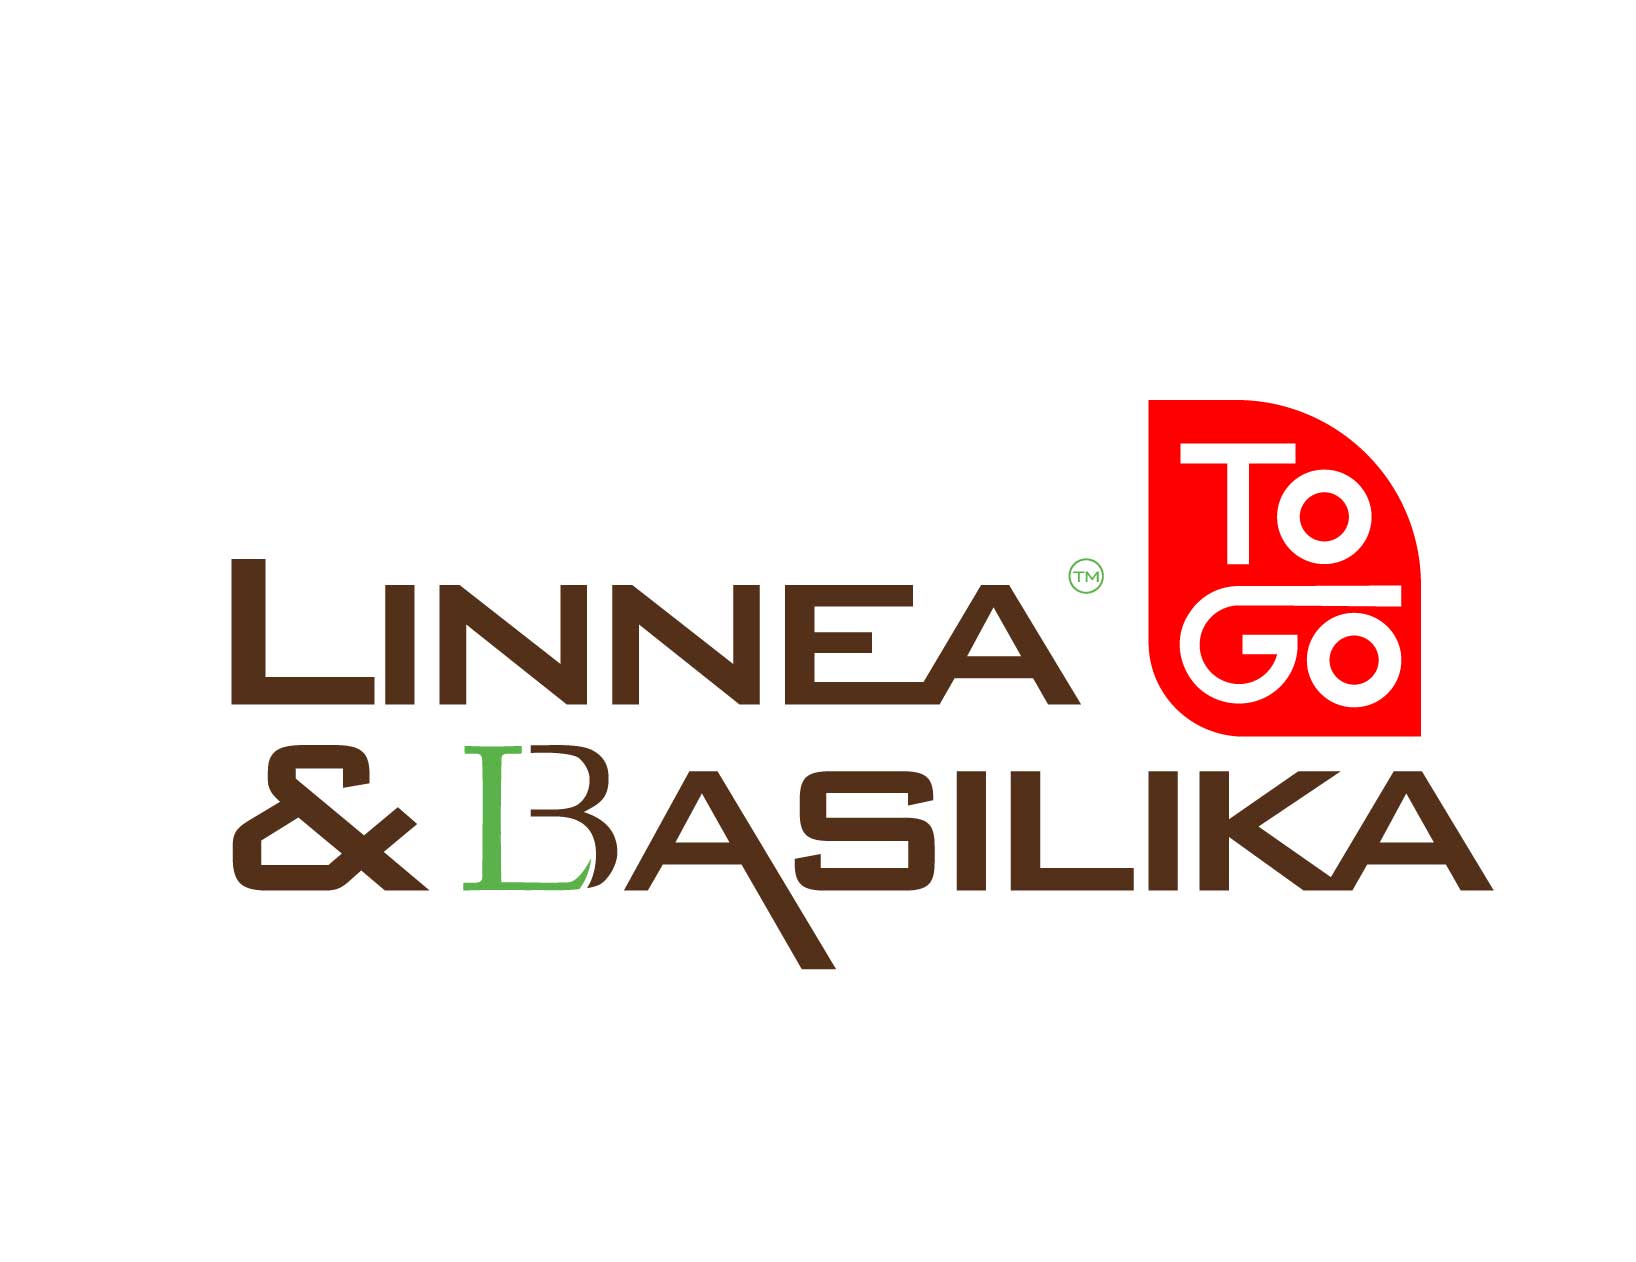 LINNEA & BASILIKA To Go